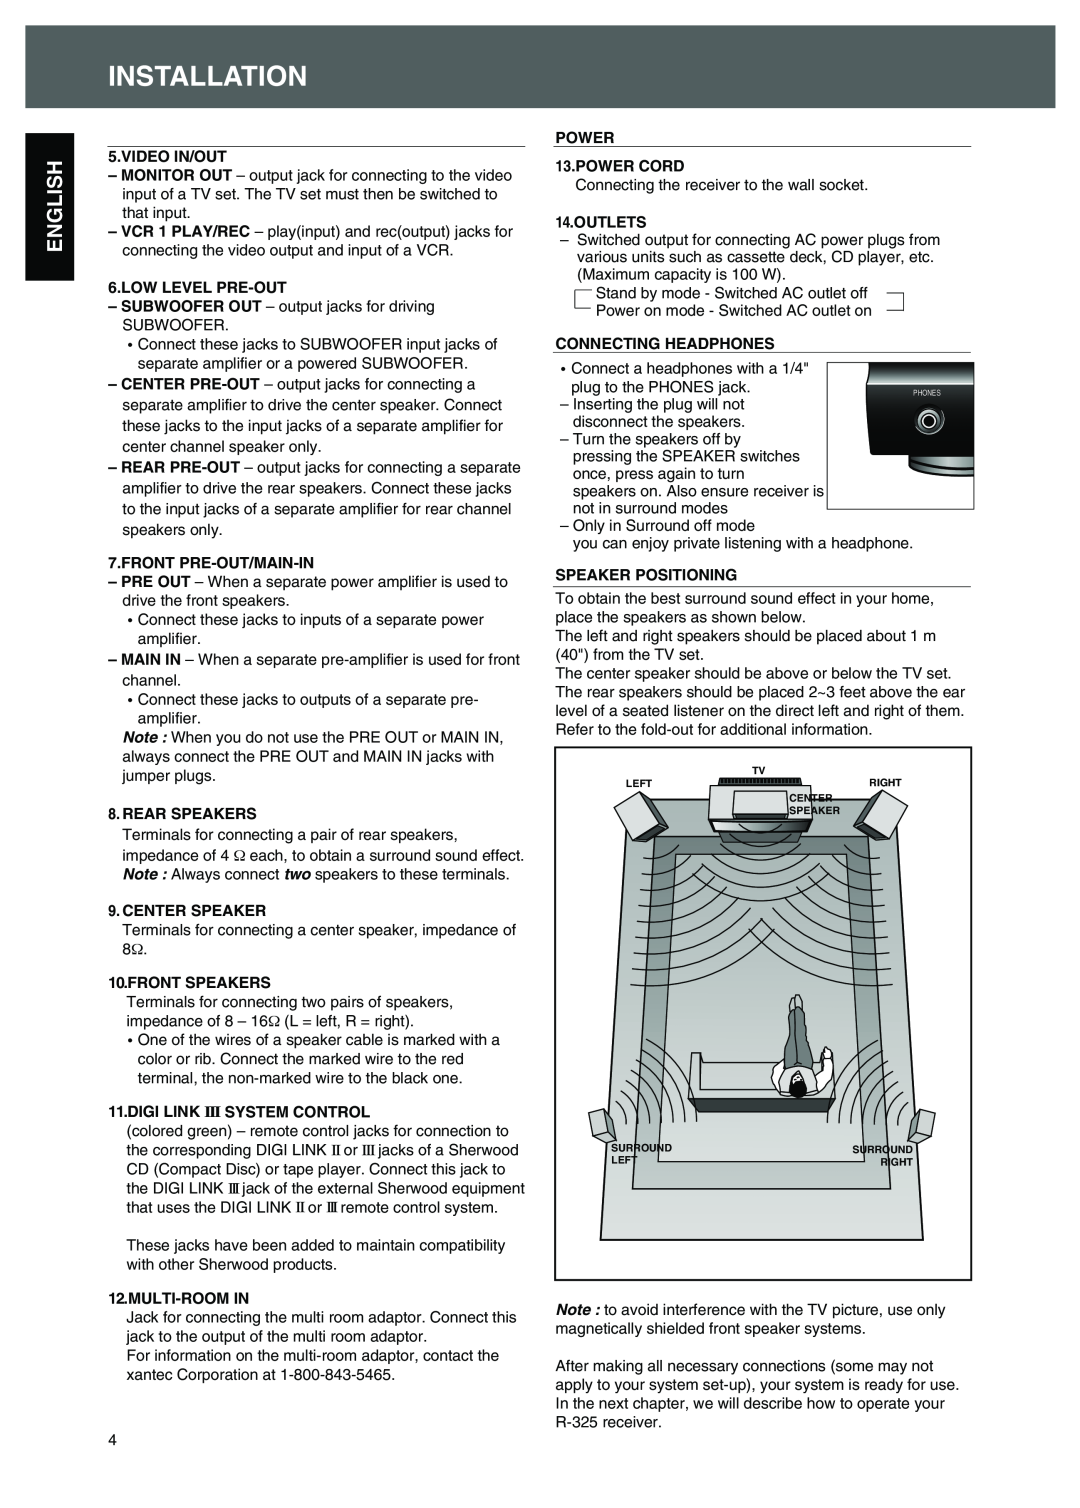 Sherwood R-325 operating instructions Speaker Positioning, Installation, English 